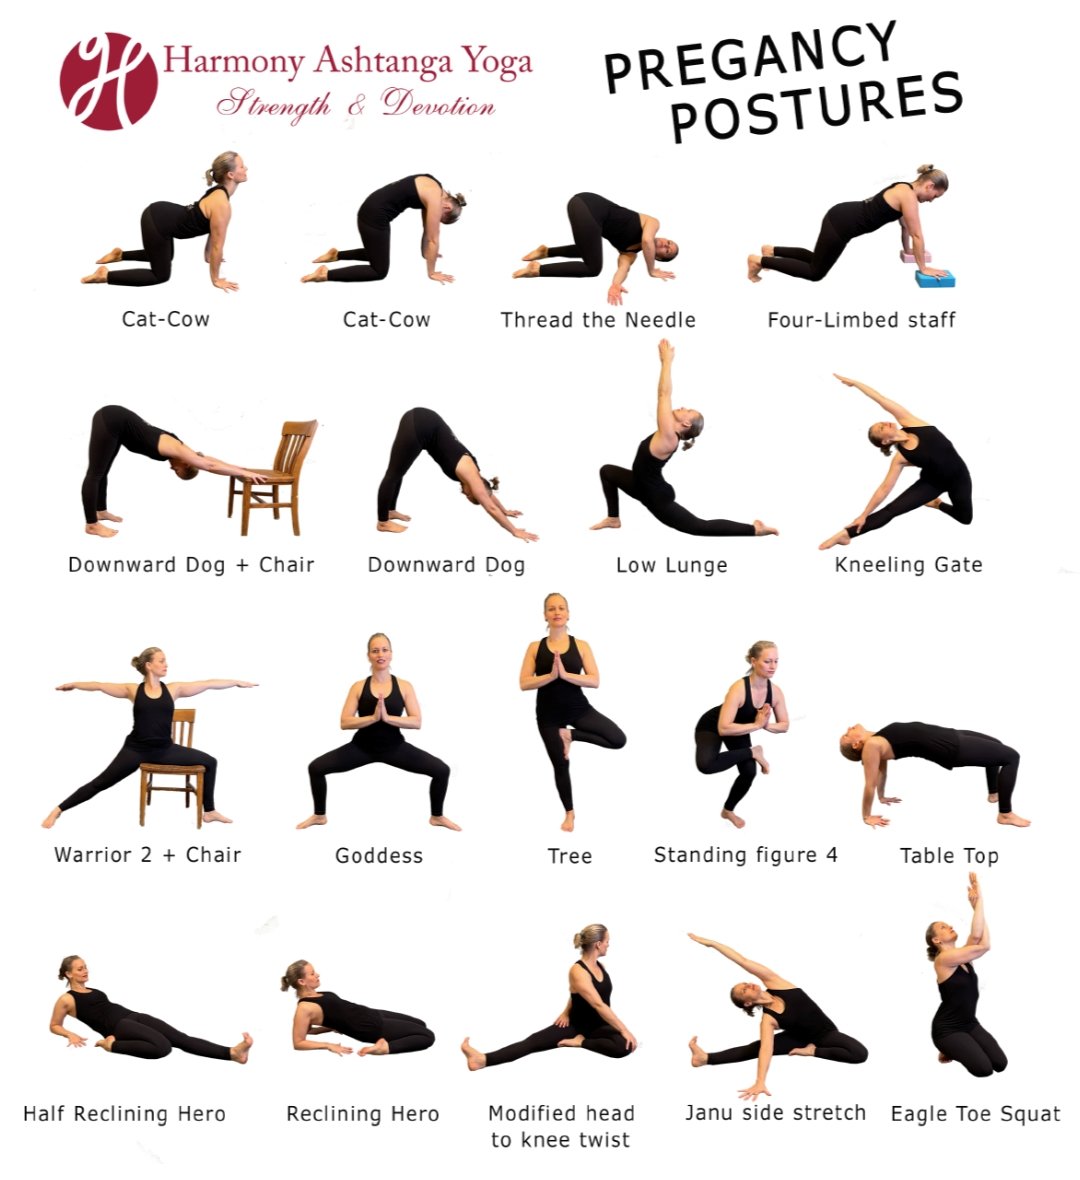 Yoga in Pregnancy: 8 Powerful Asanas to Boost Strength